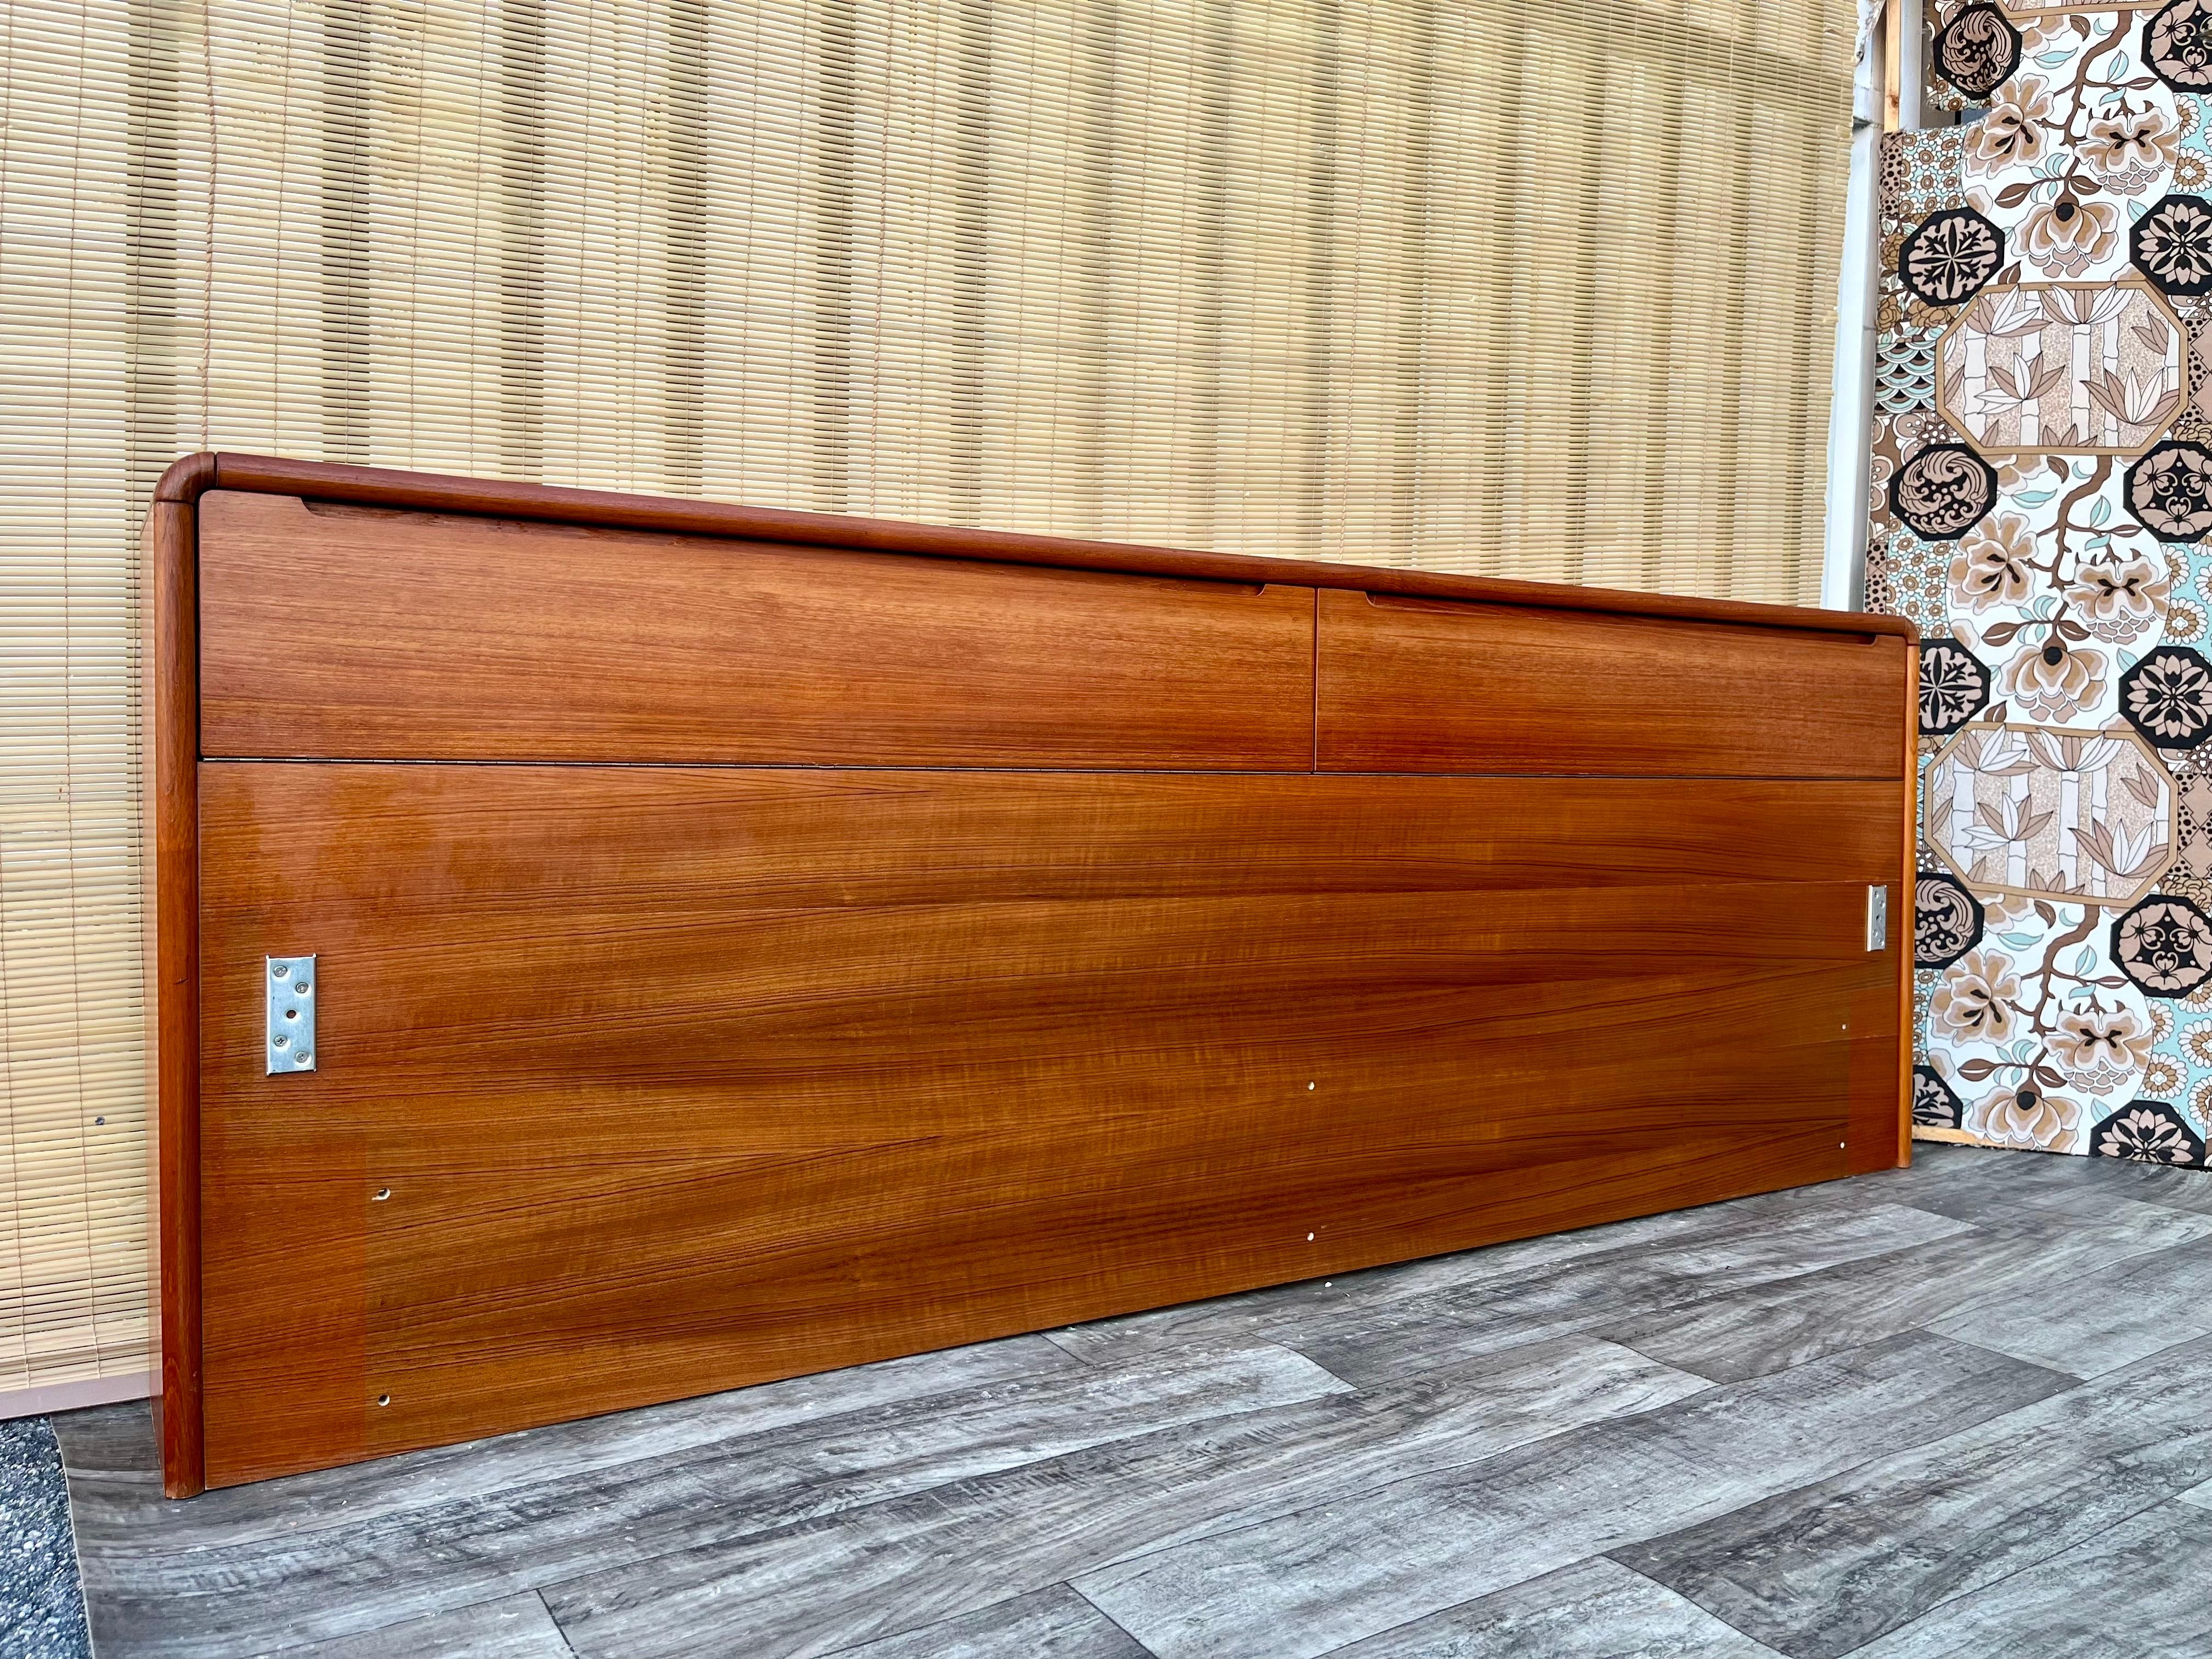 wooden headboard with storage